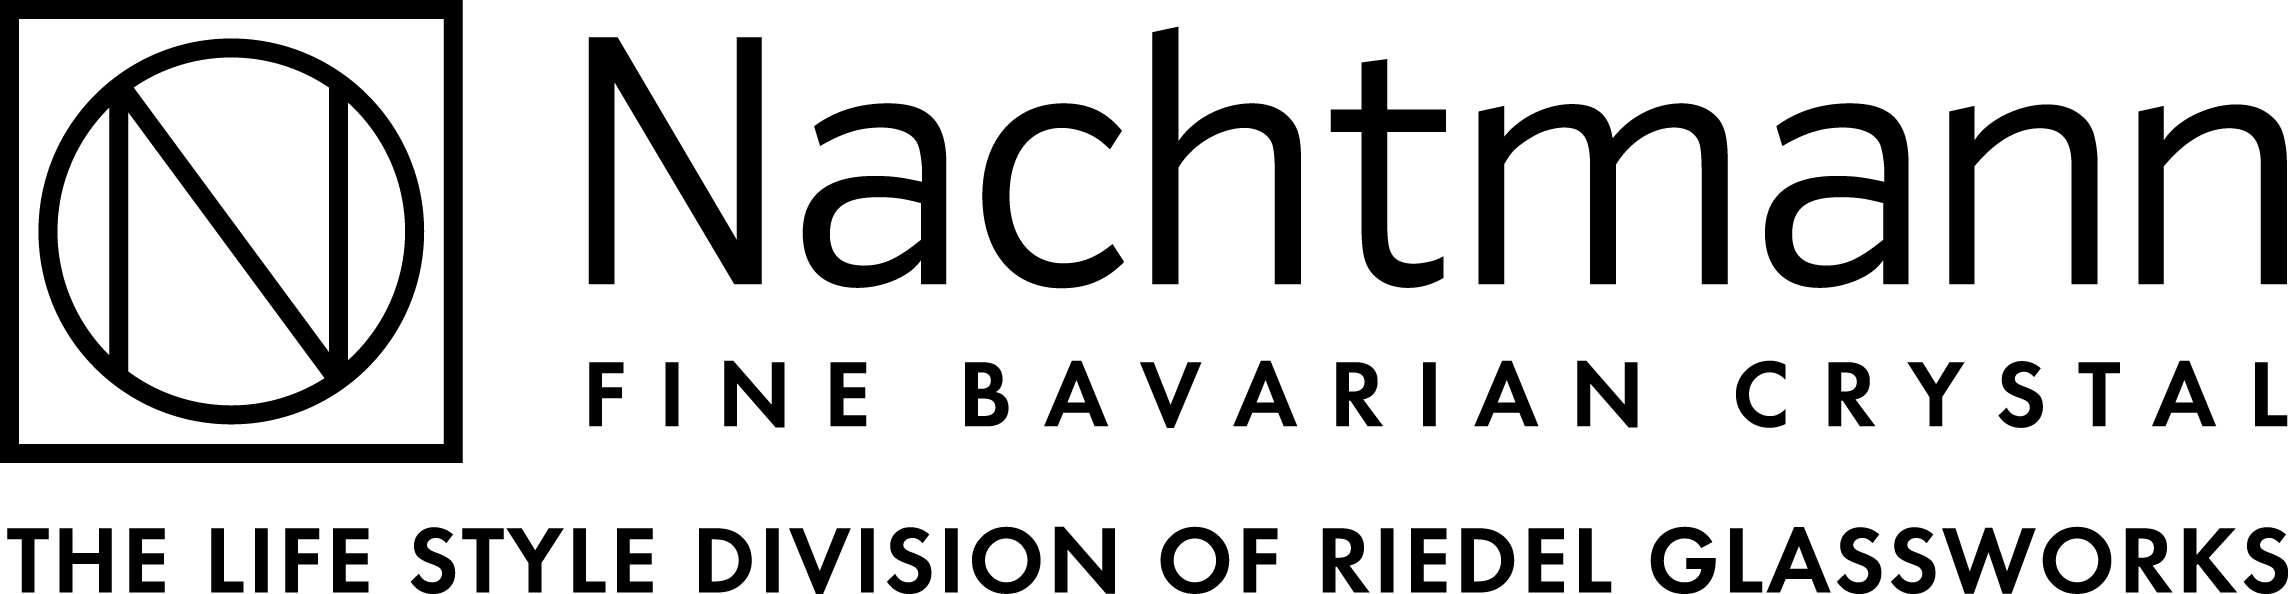 Logo Nachtmann